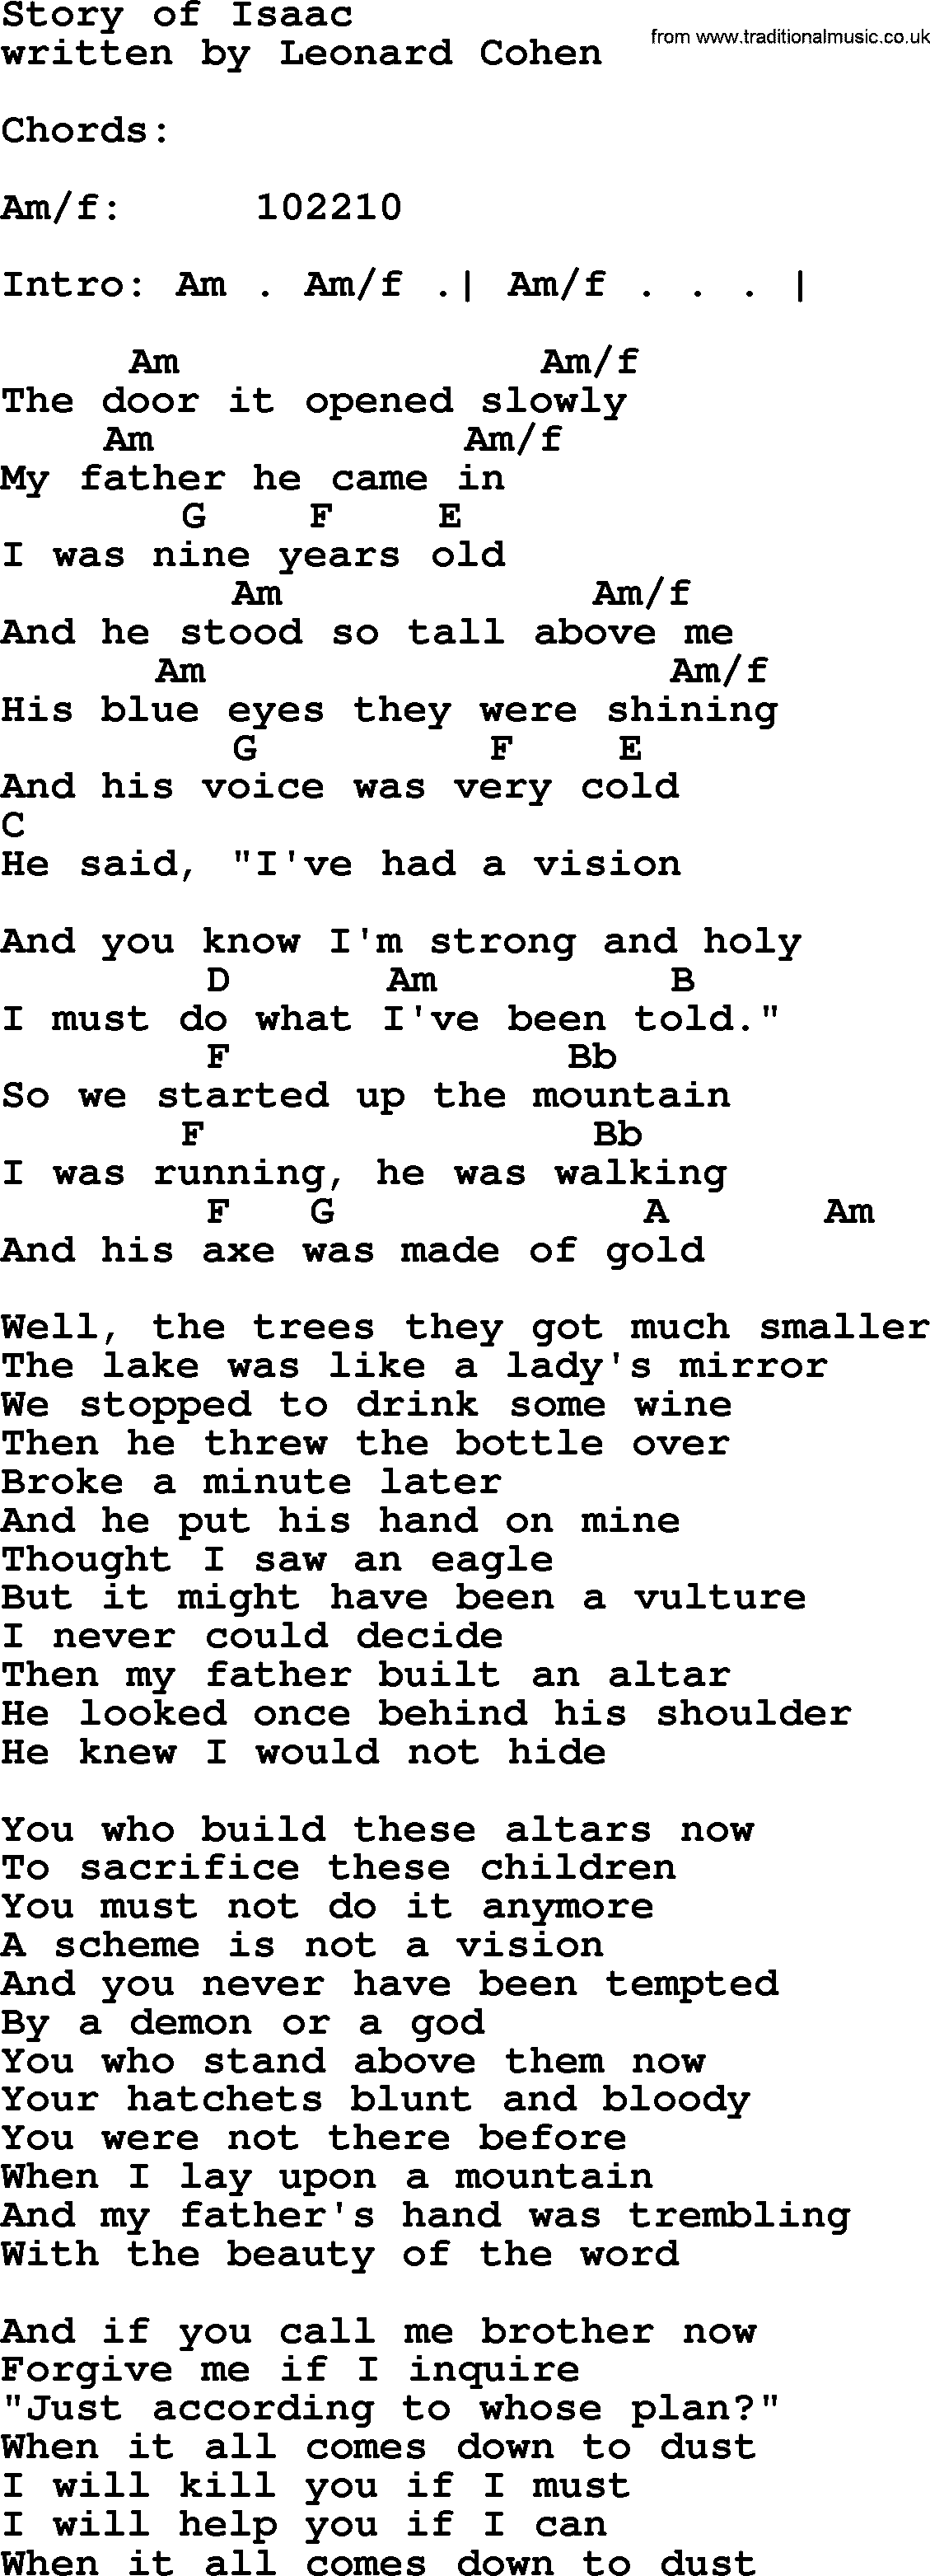 Leonard Cohen song Story Of Isaac, lyrics and chords